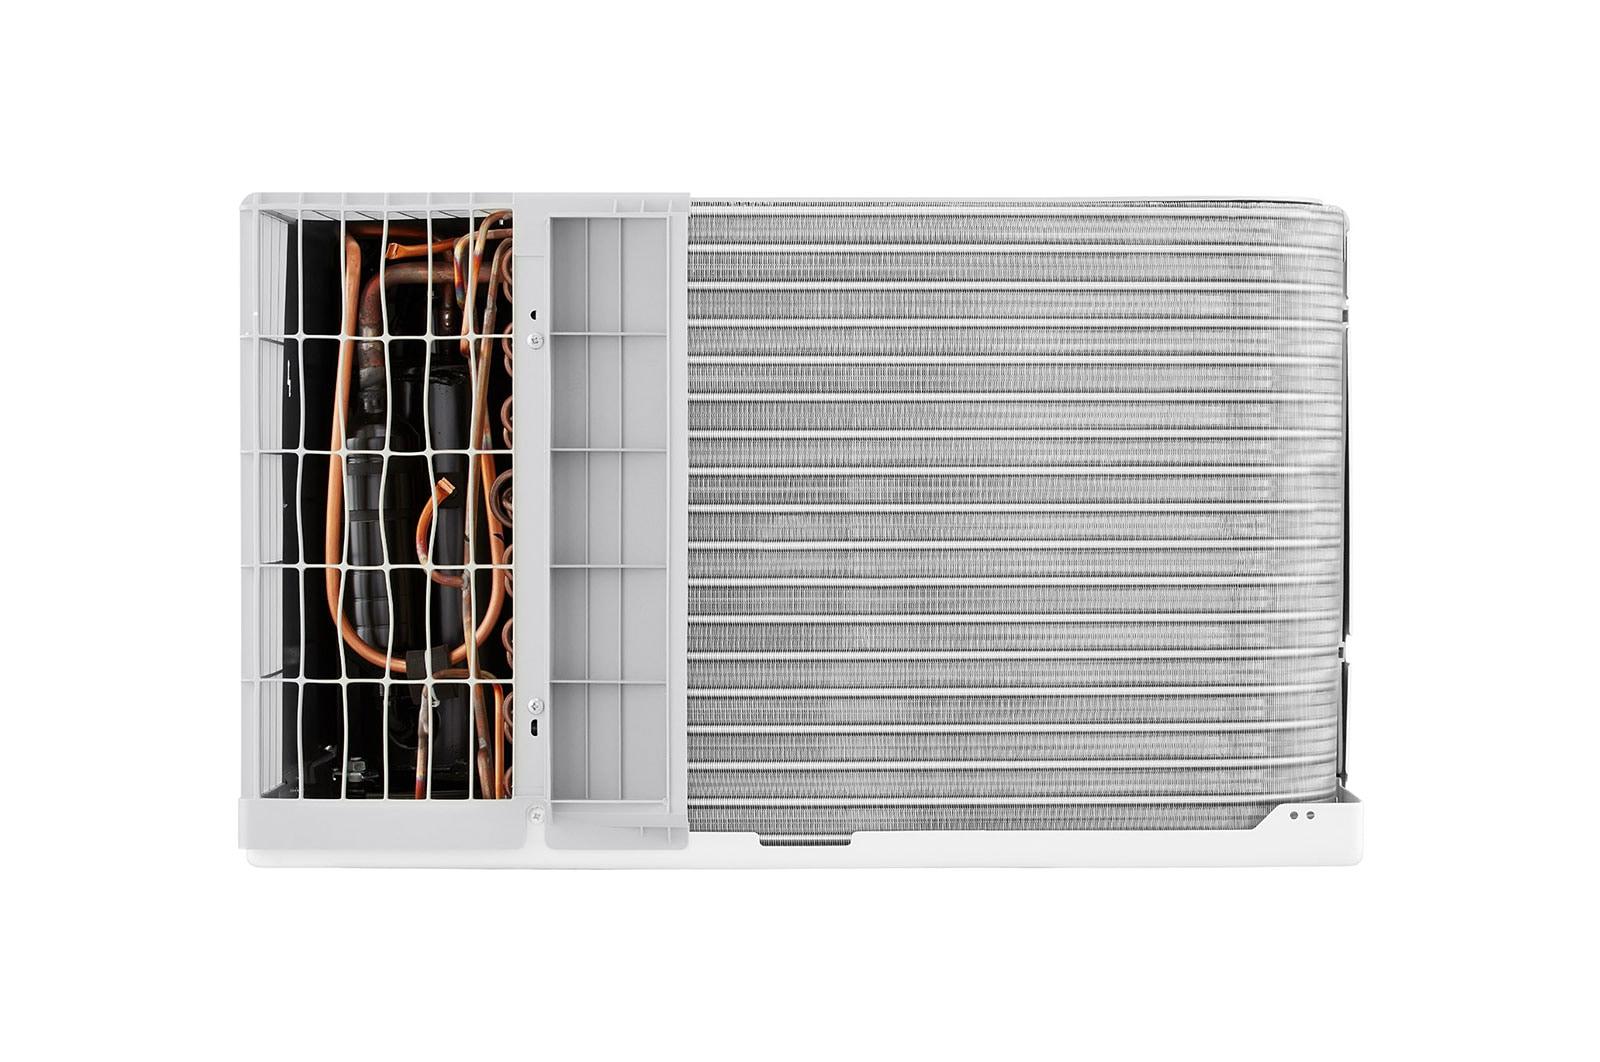 Lg 12,000 BTU 115v Through-the-Wall Air Conditioner